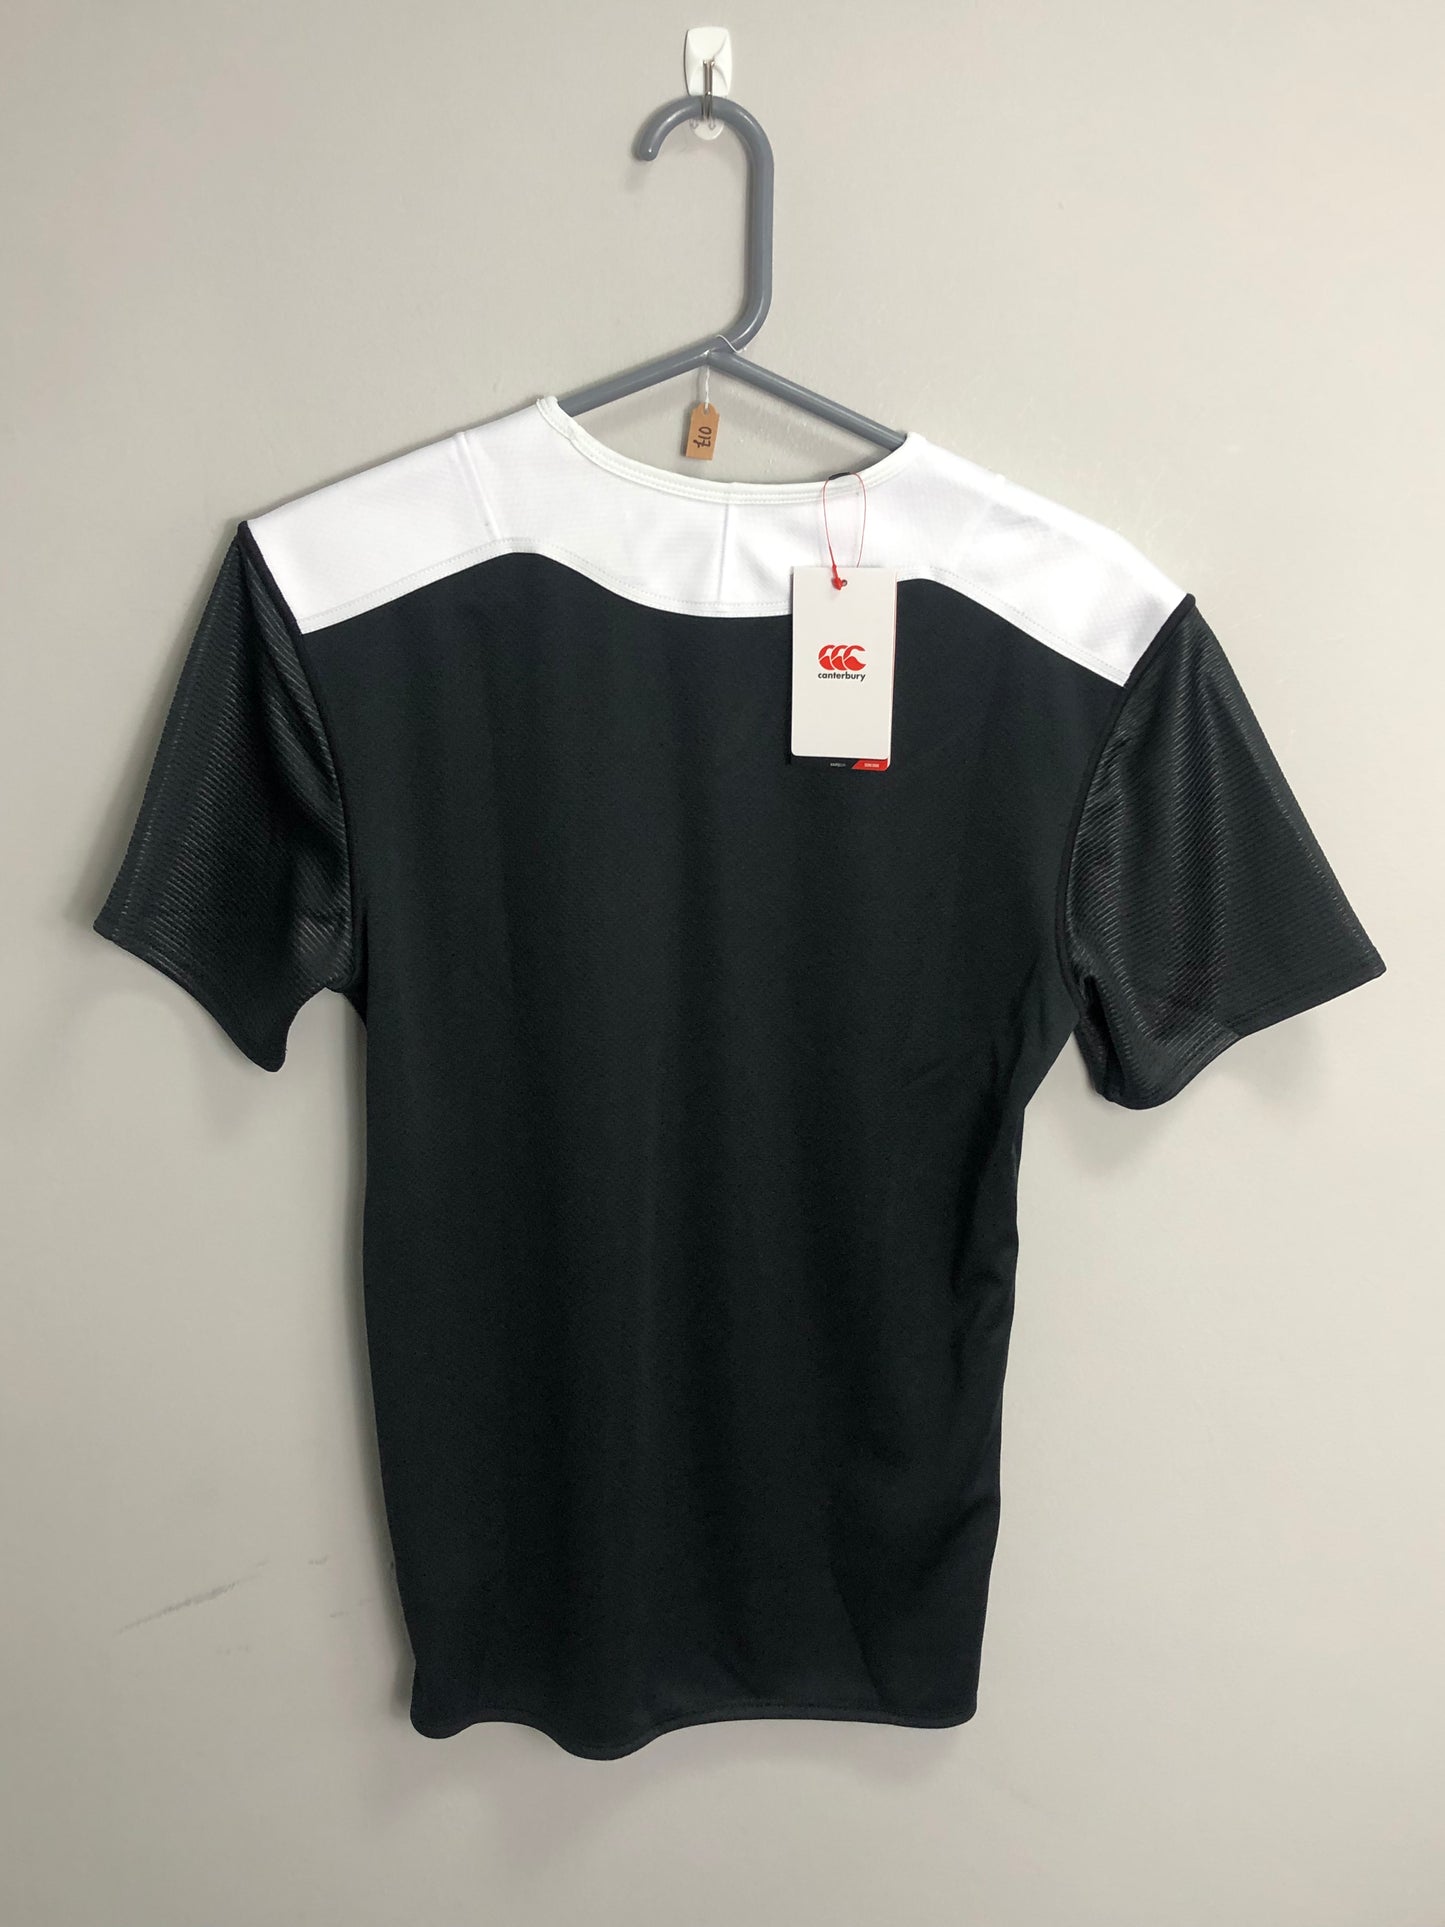 Canterbury Training Shirt - 34” Chest - Small